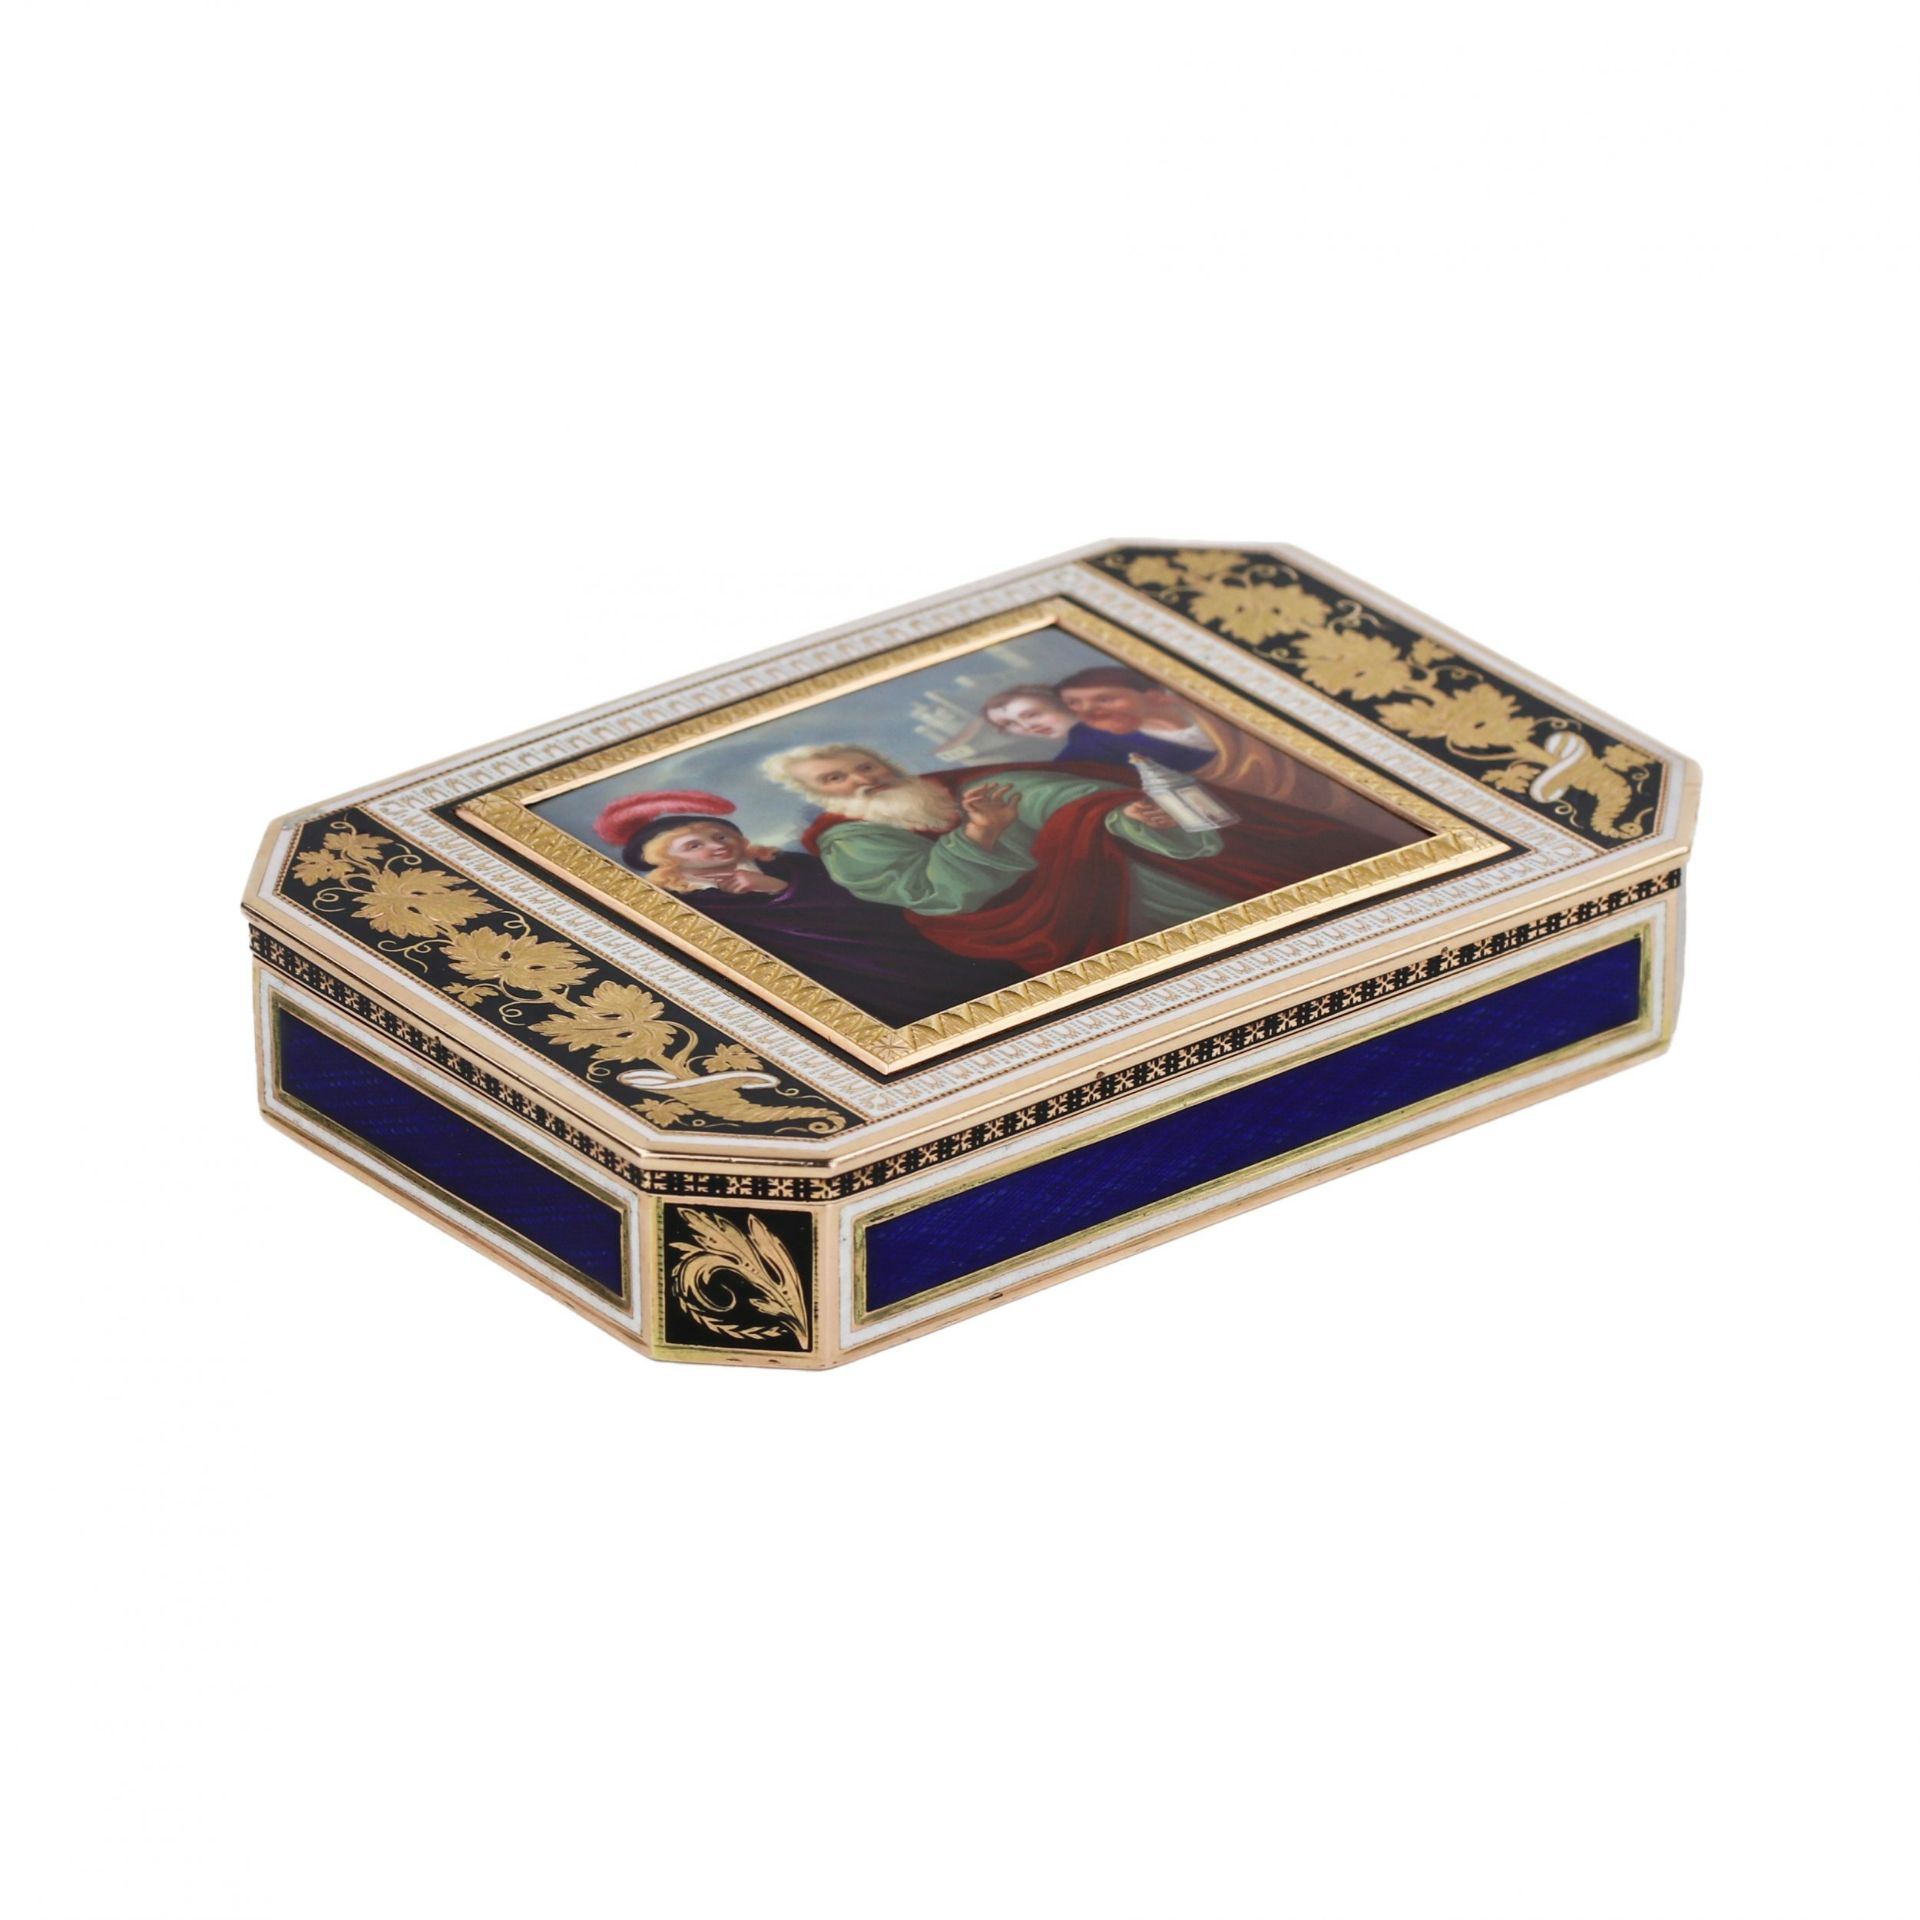 Snuffbox made of gold and enamel, Hanau, 1810 -1815